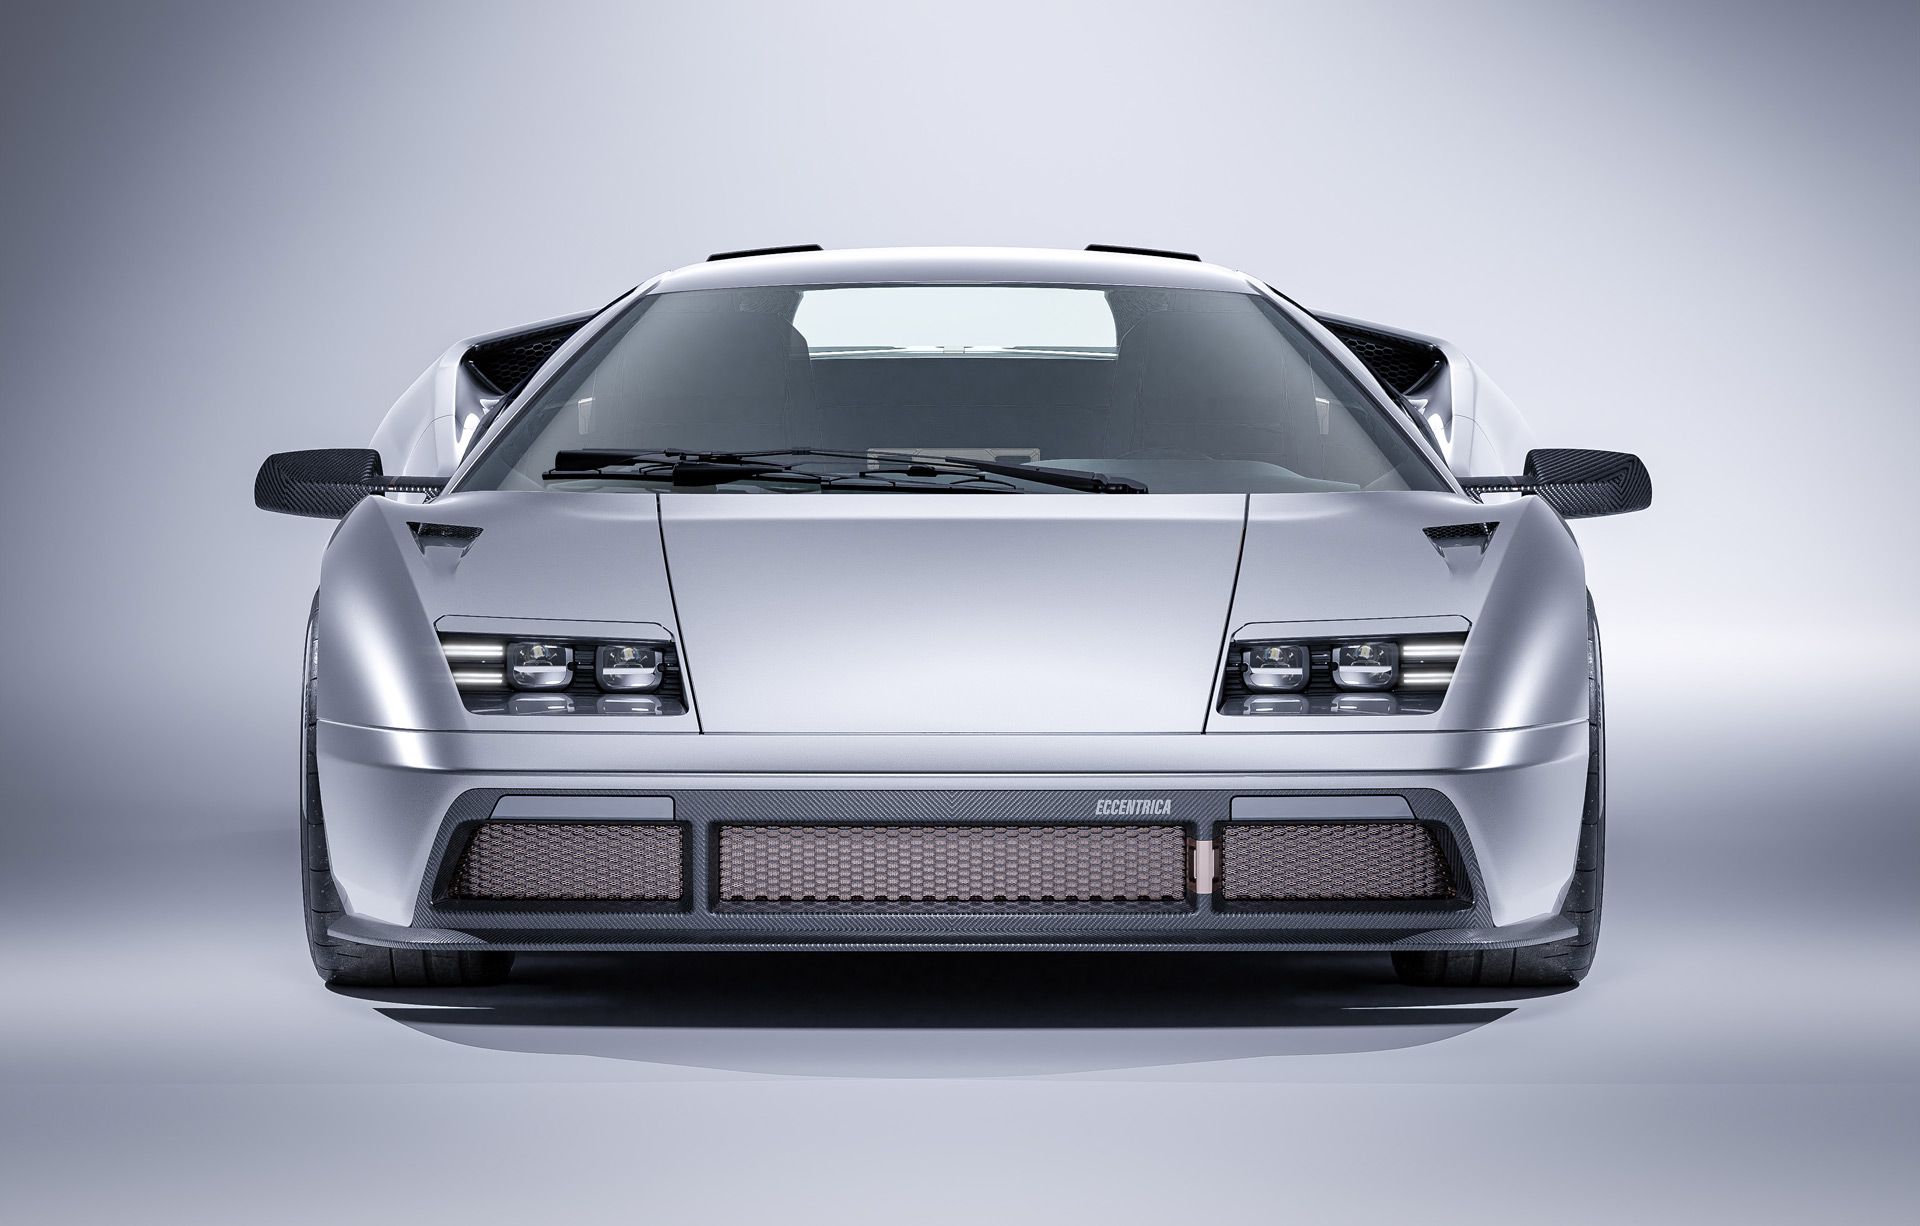 Lamborghini Diablo restomod, Ford Mustang Dark Horse R: Car News Headlines Auto Recent